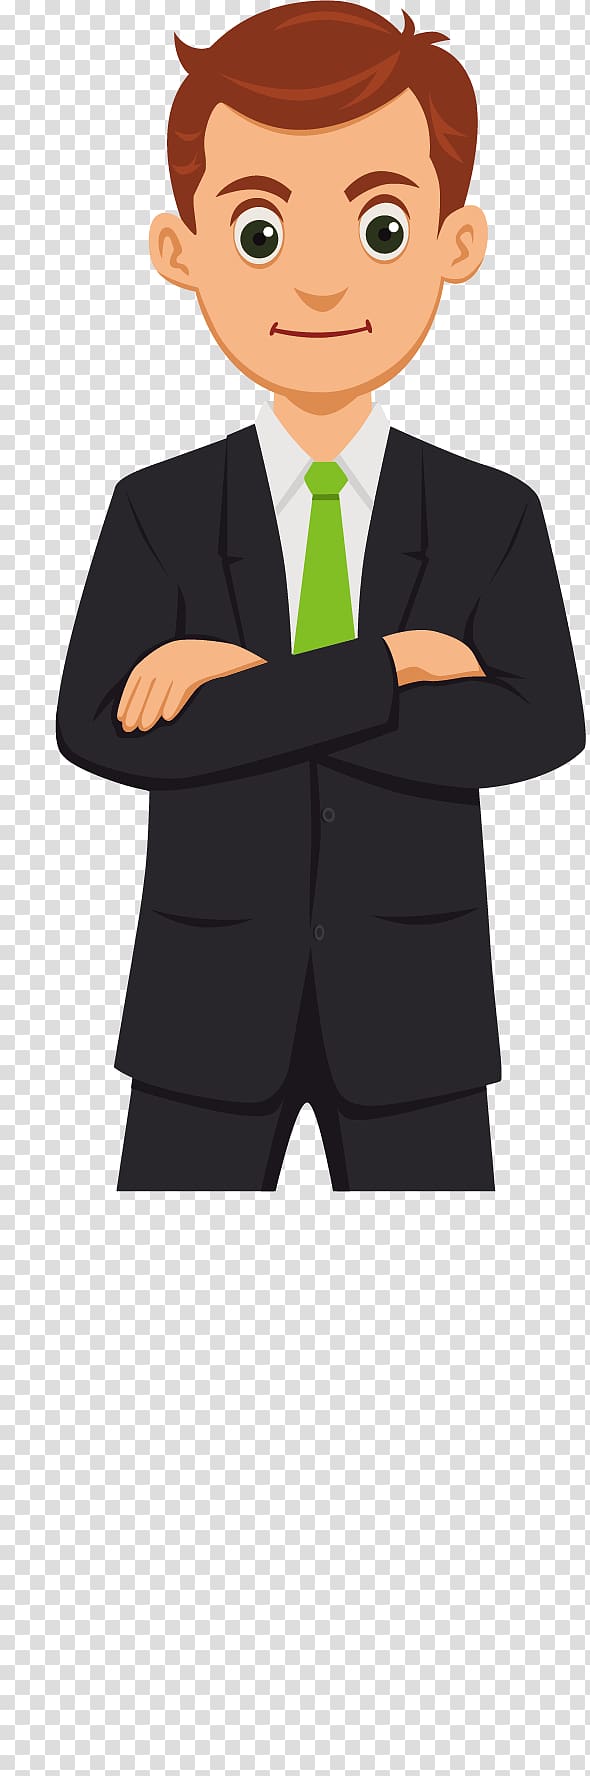 Cartoon Commerce, cartoon business man, man wearing black suit jacket transparent background PNG clipart